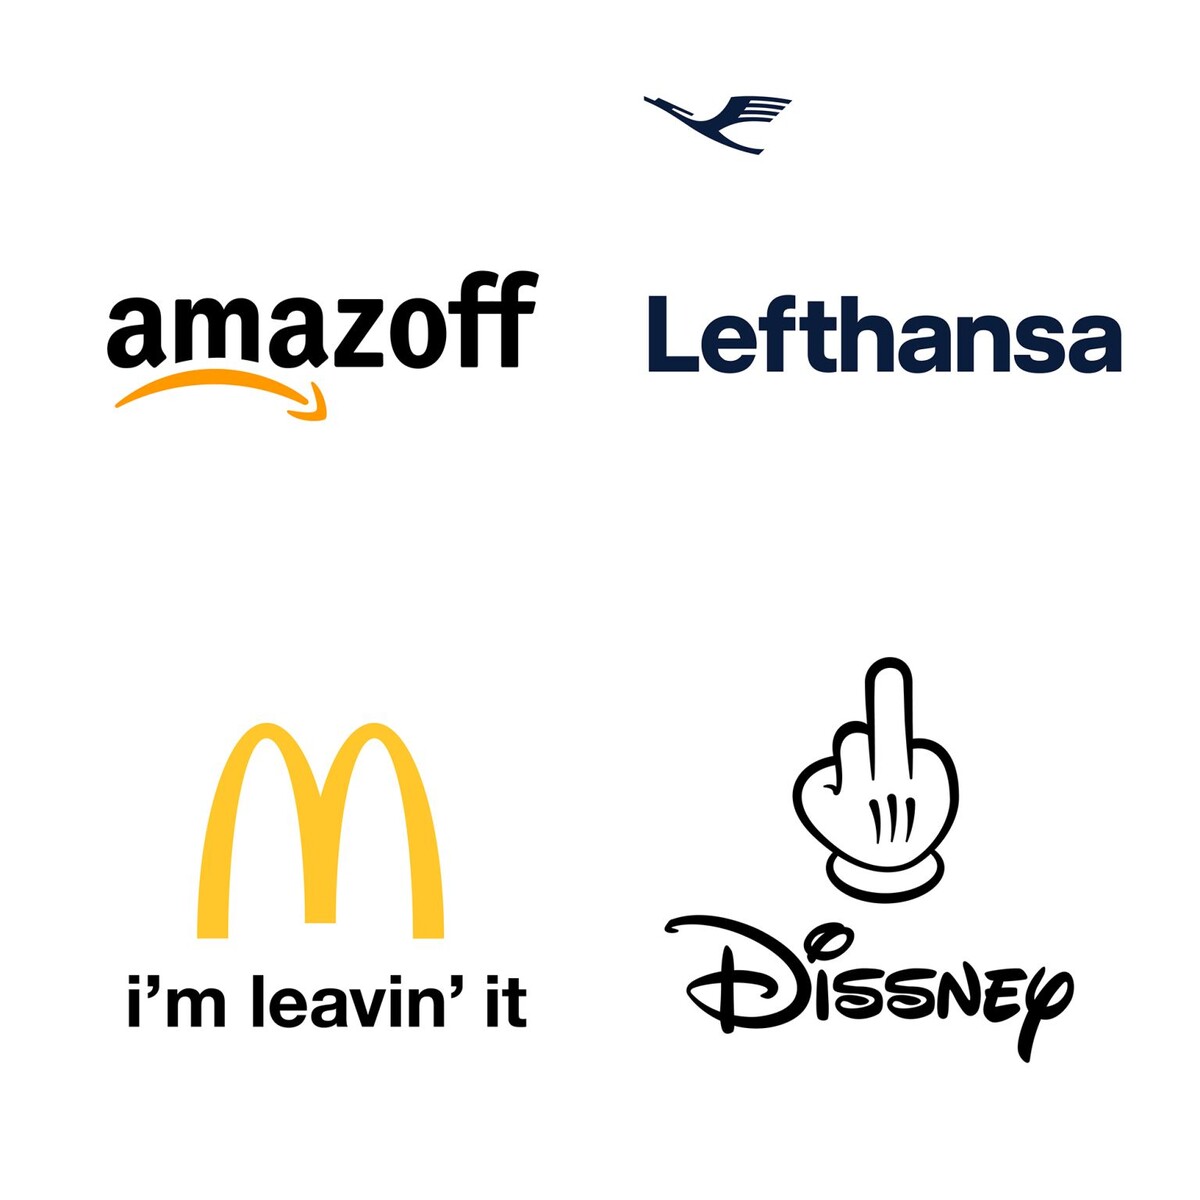 Upravené logá firiem po ich odchode z ruského trhu.